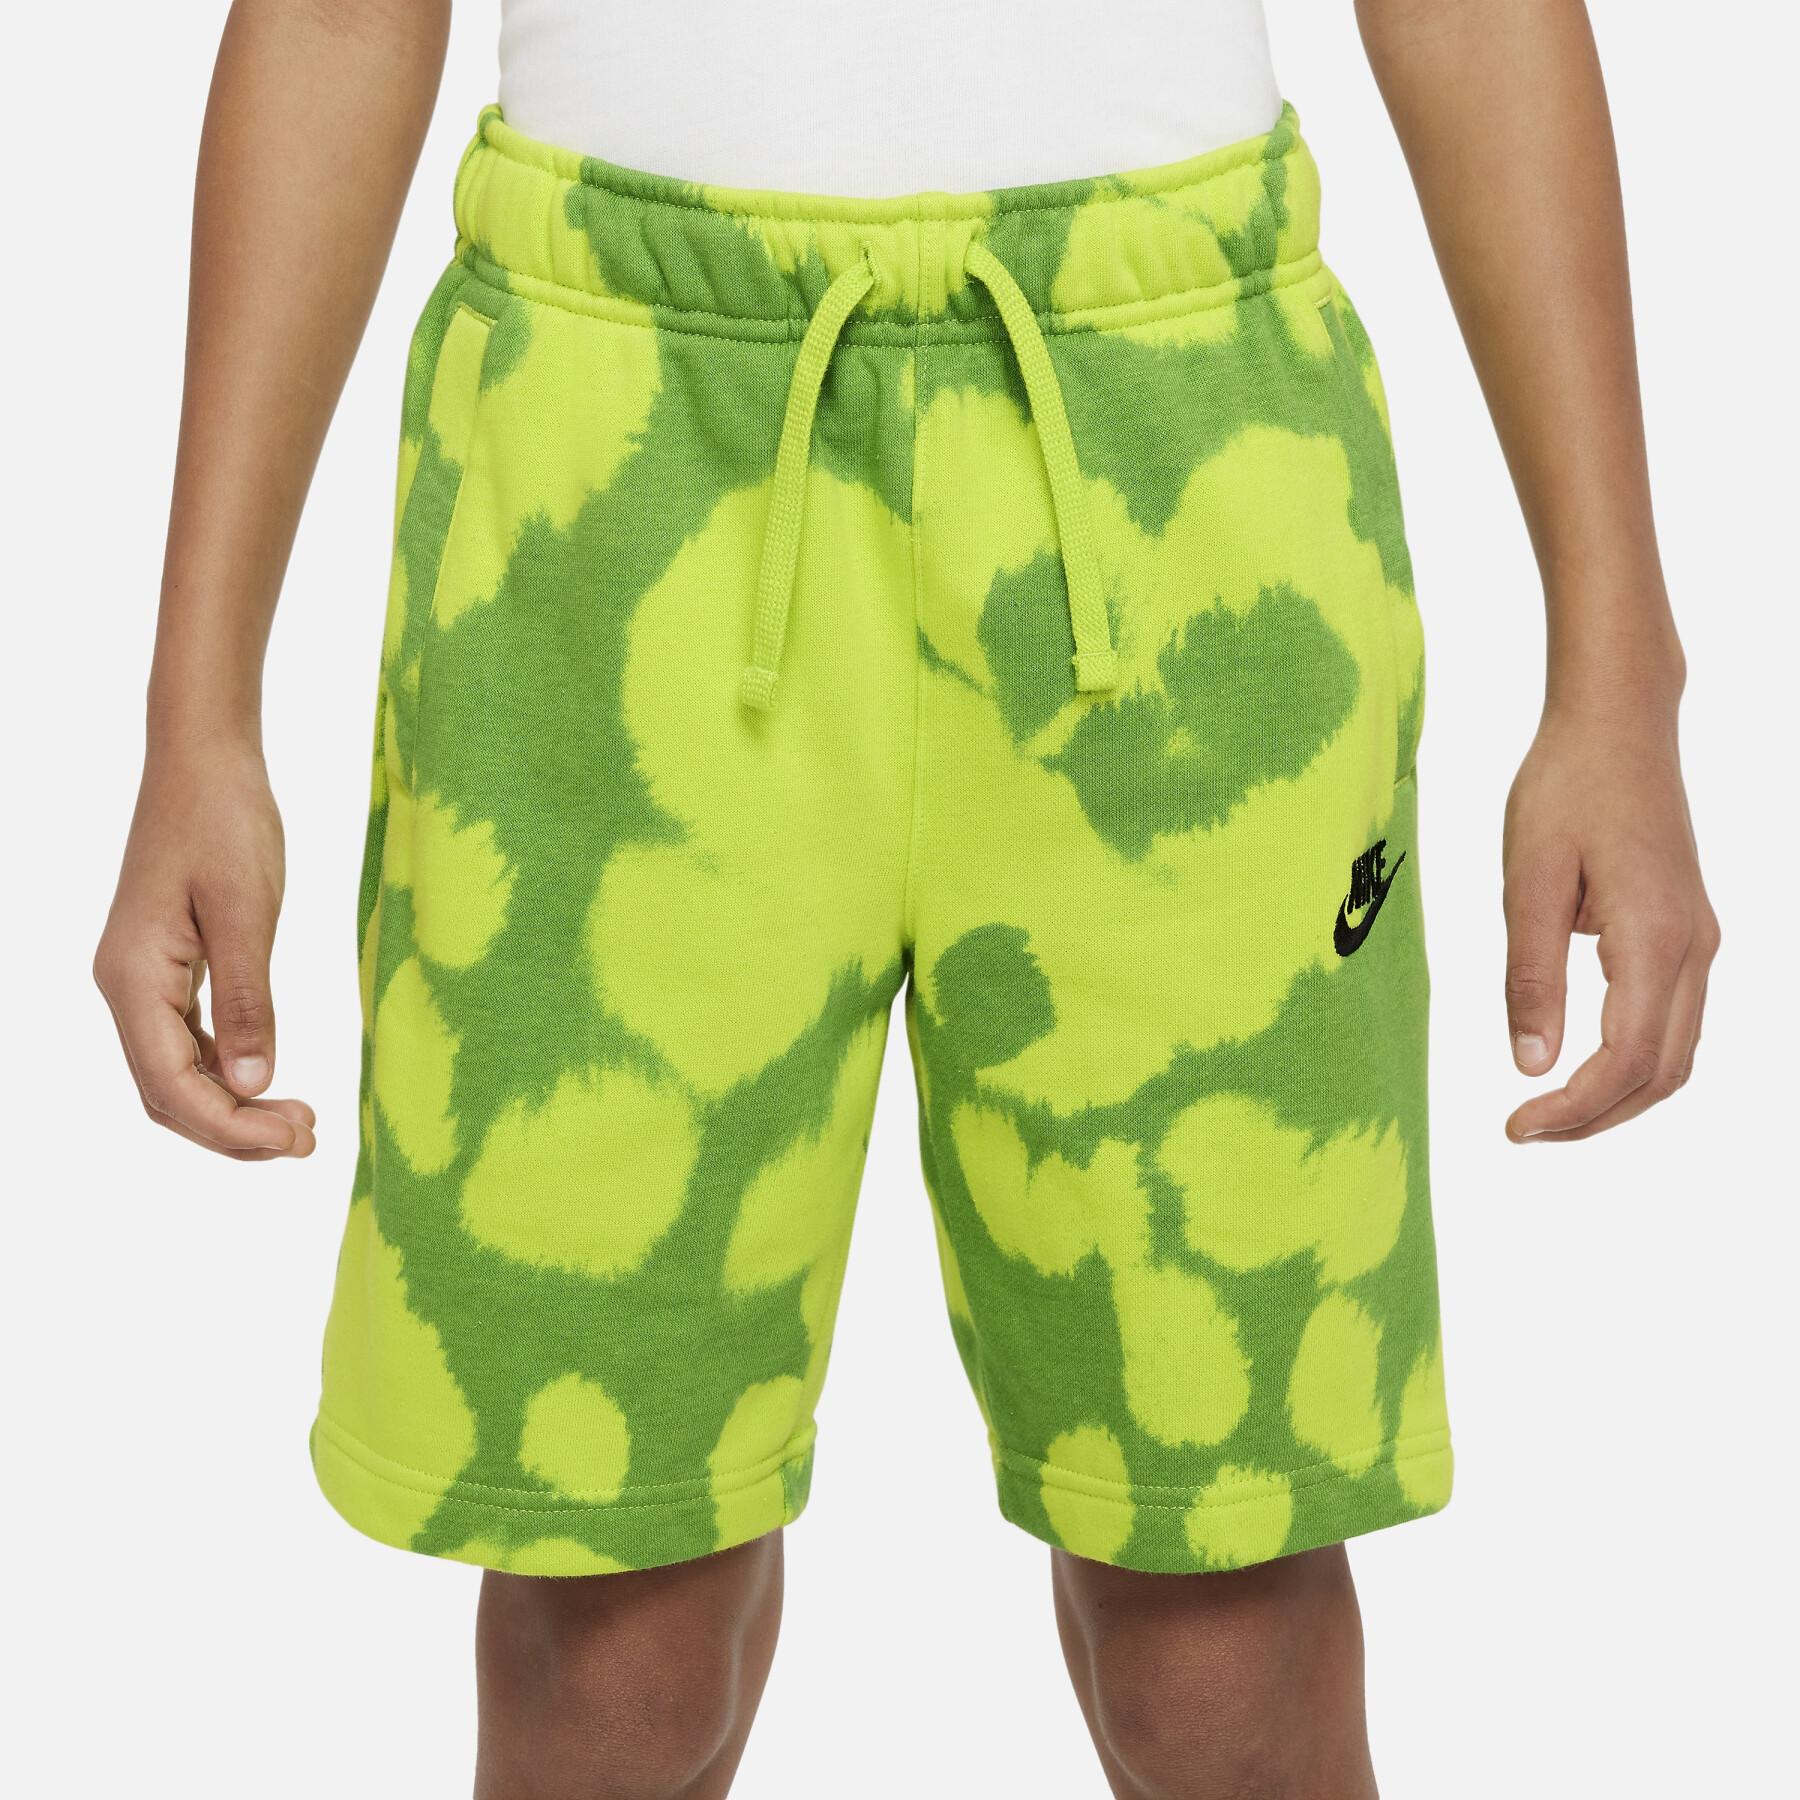 Kinder shorts Nike Connect